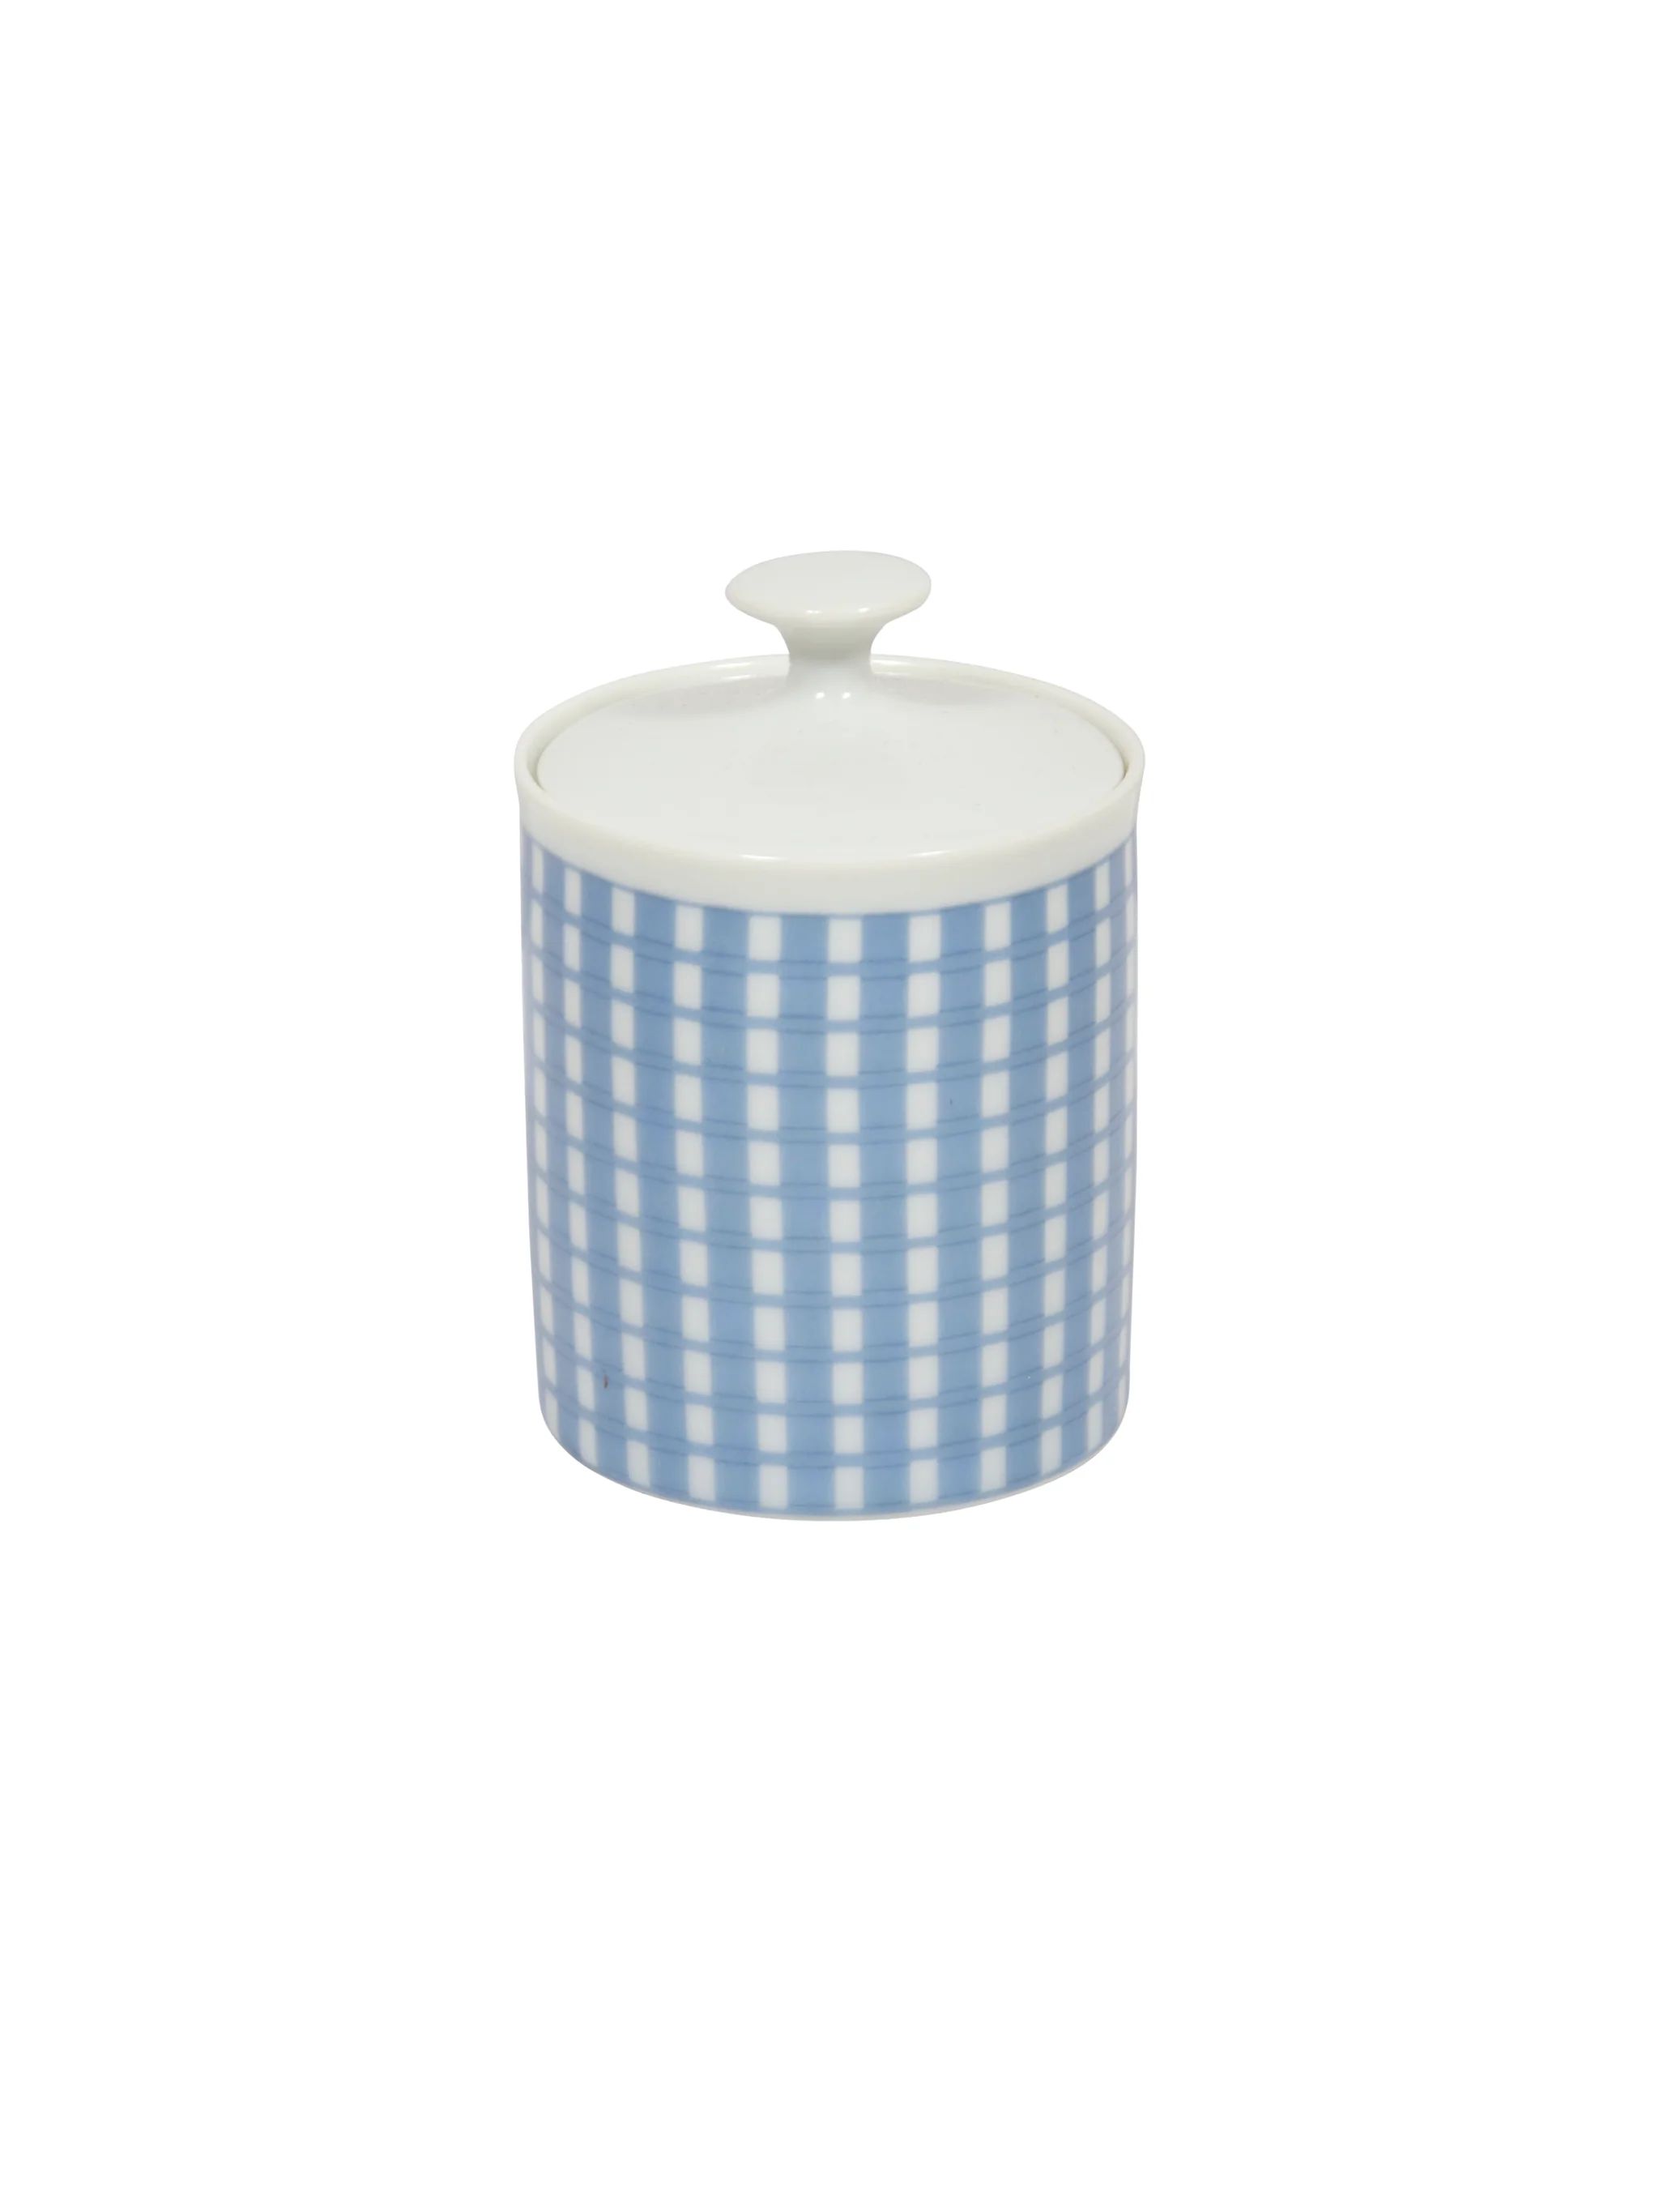 Vintage 1960s Light Blue Gingham Arzberg Sugar Bowl & Creamer | Weston Table